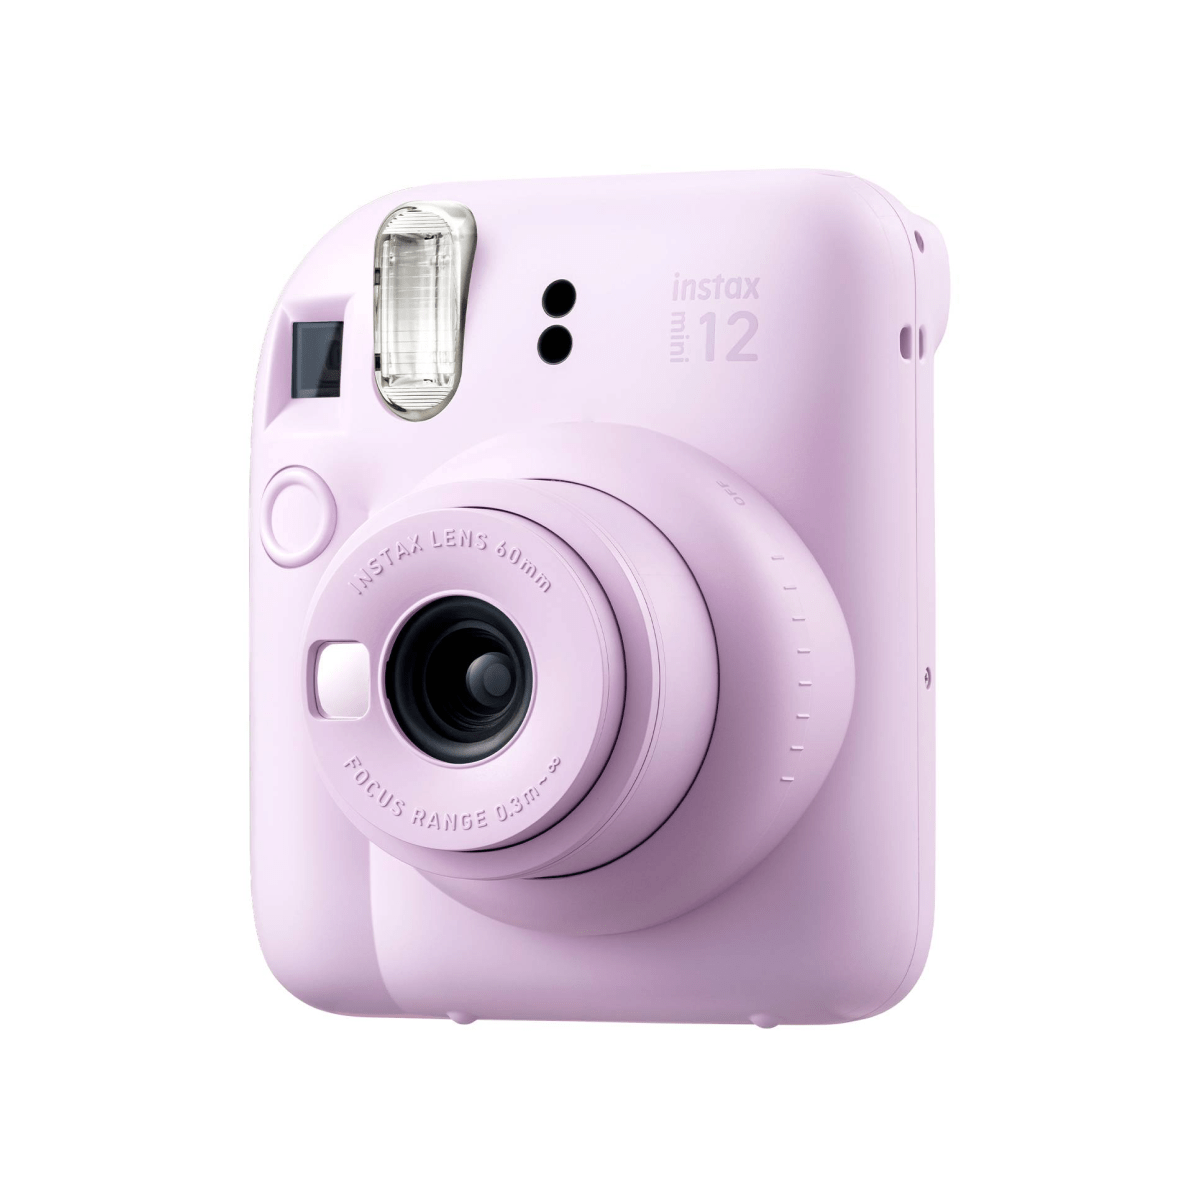 Kit camara fujifilm mini instax 12 color rosa pastel + papel 10 fotos + 3  portara